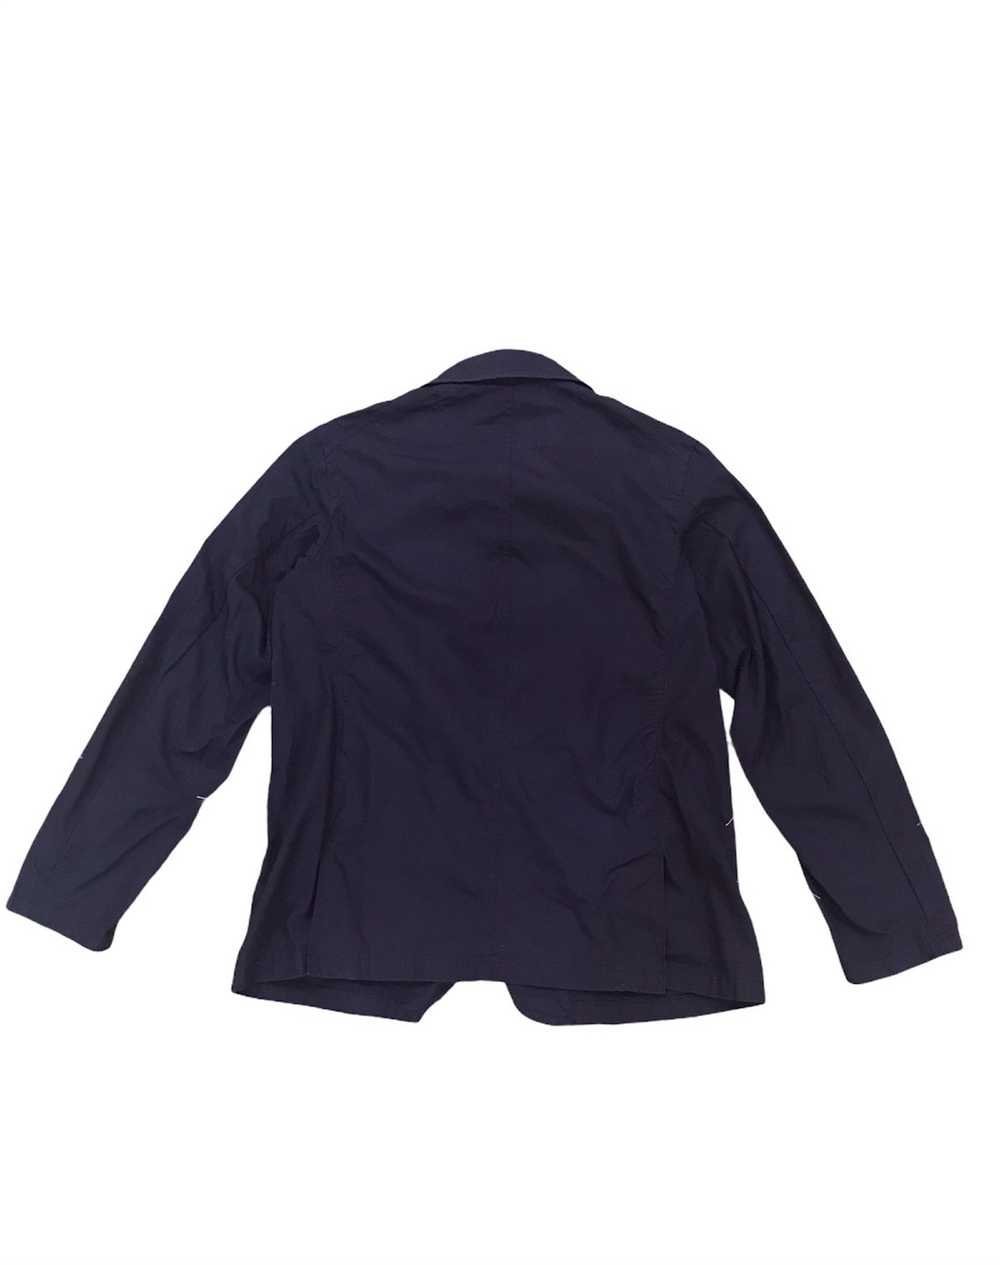 Danton Danton jacket size 36 made in Japan - image 2